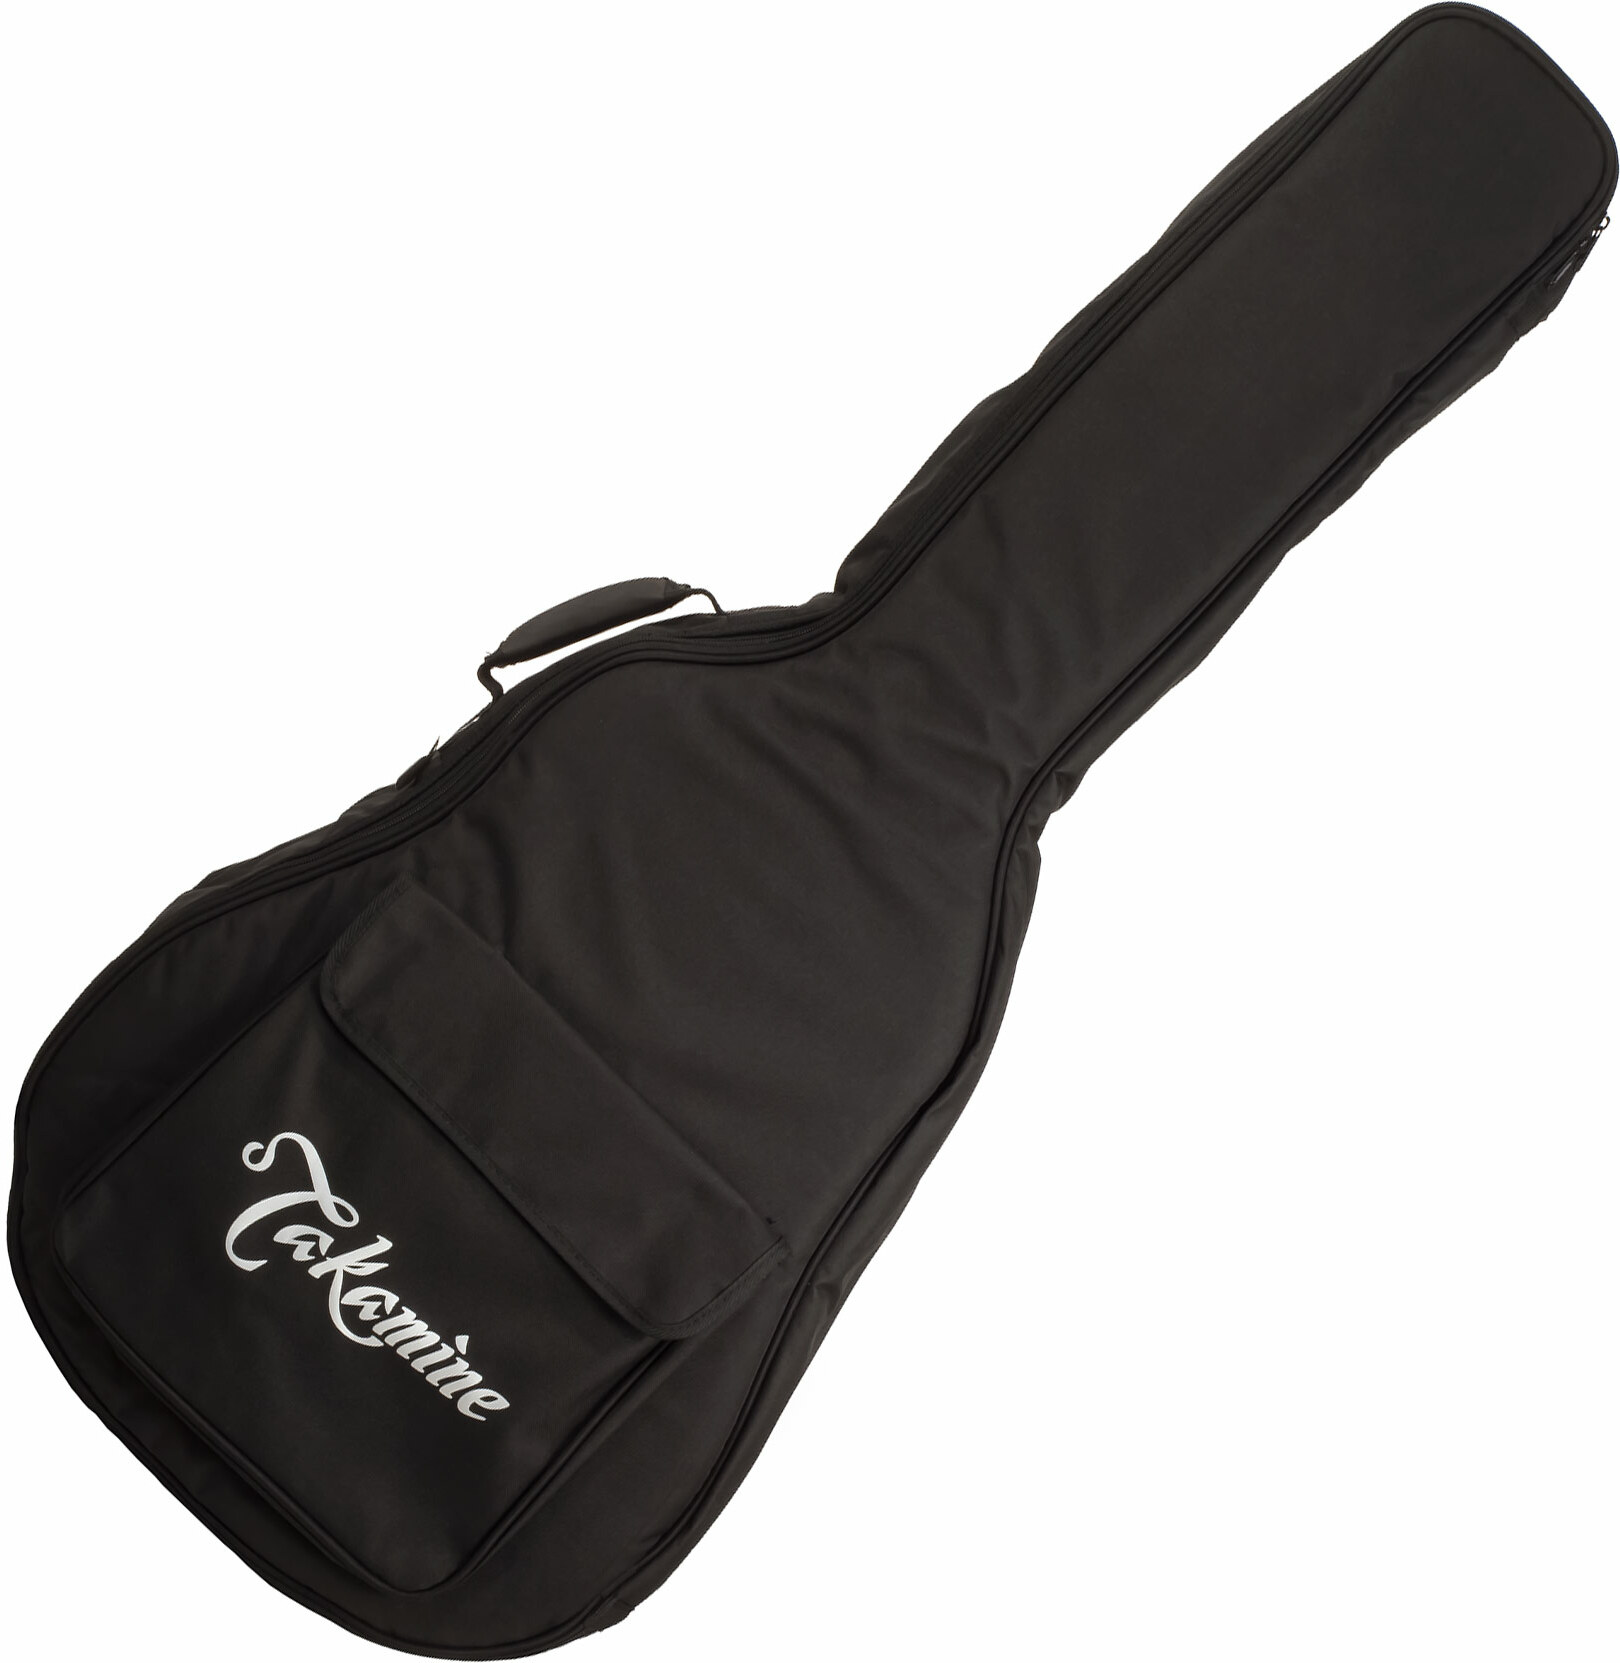 Takamine Gb-s Concert Acoustic Guitar Bag - Acoustic guitar gig bag - Main picture